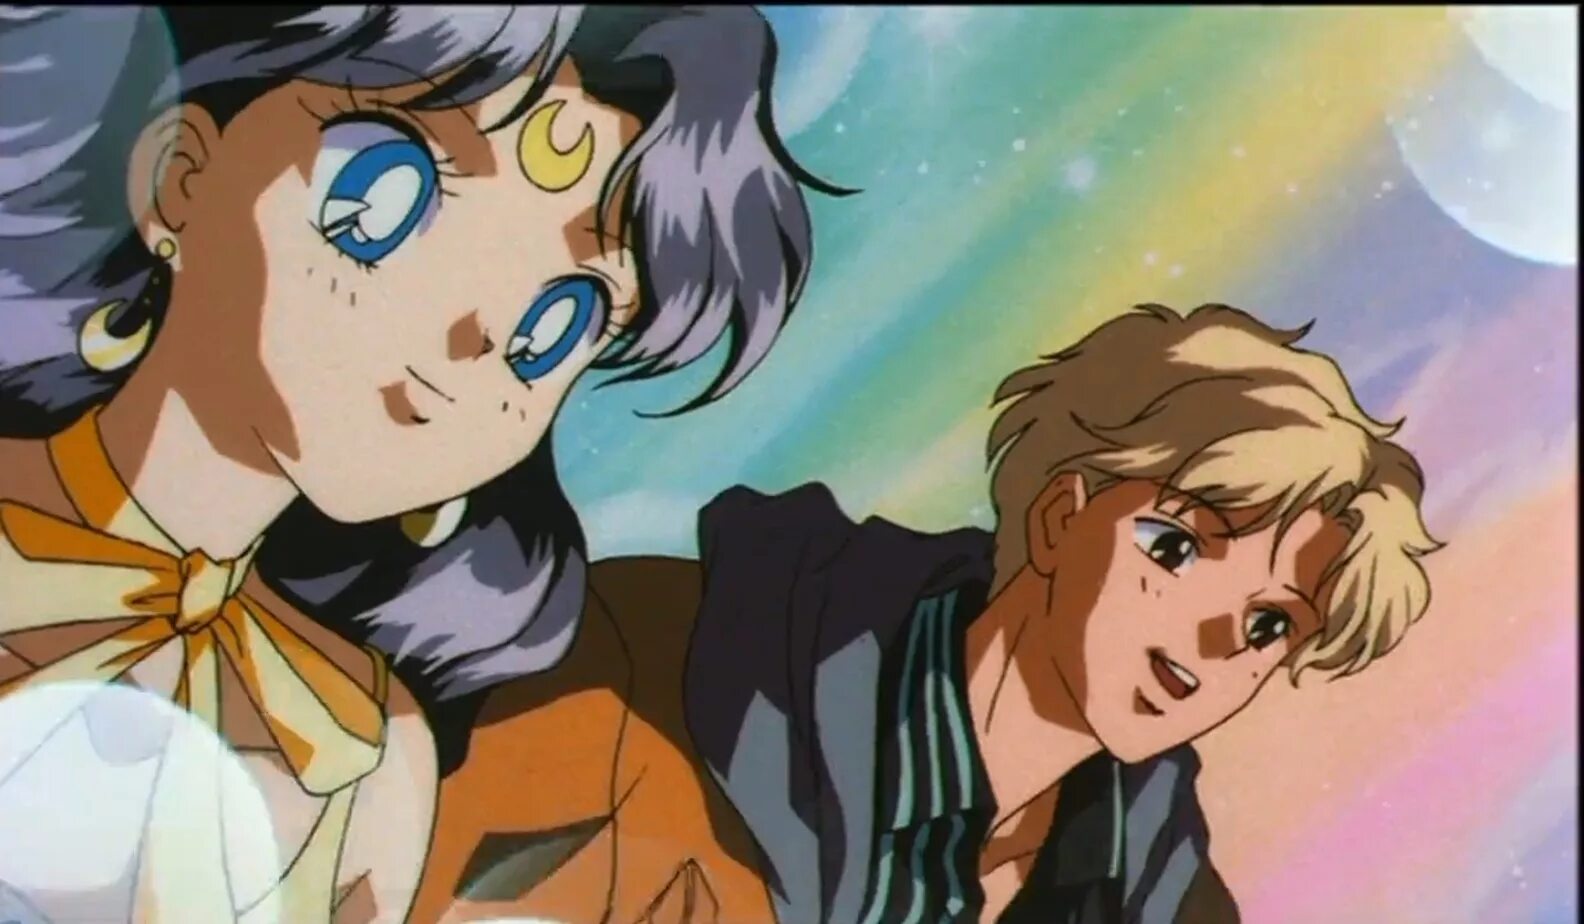 Мун эс. Красавица-воин Сейлор Мун ЭС: возлюбленный принцессы Кагуи. Сейлор Мун Снежная принцесса Кагуя. Sailor Moon Снежная принцесса Кагуя.